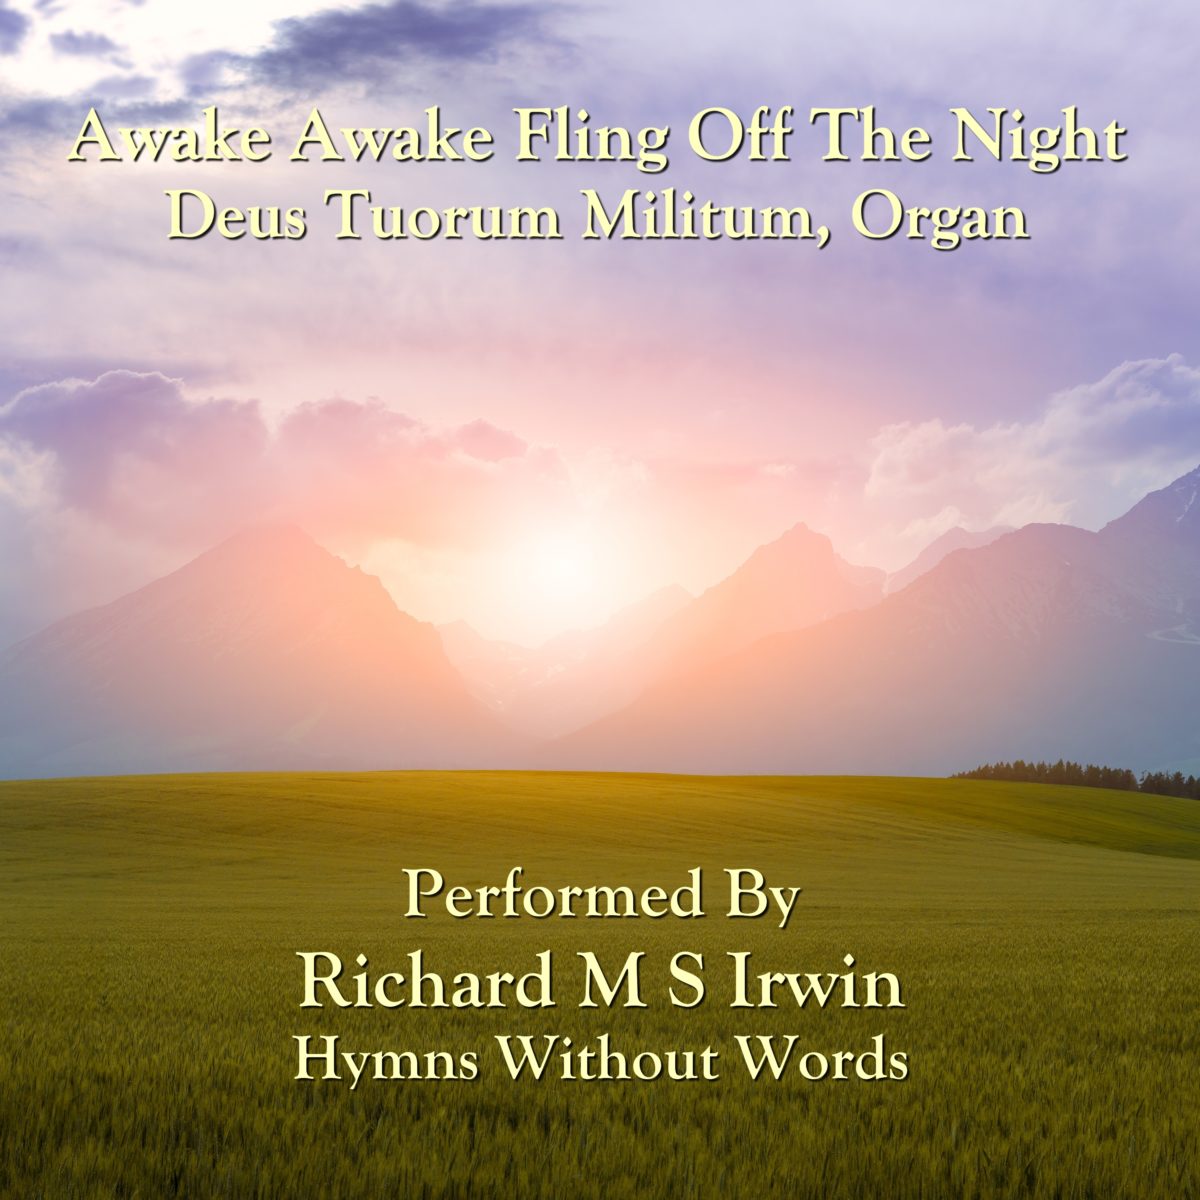 Awake Awake Fling Off The Night (Deus Tuorum Militum, Organ)